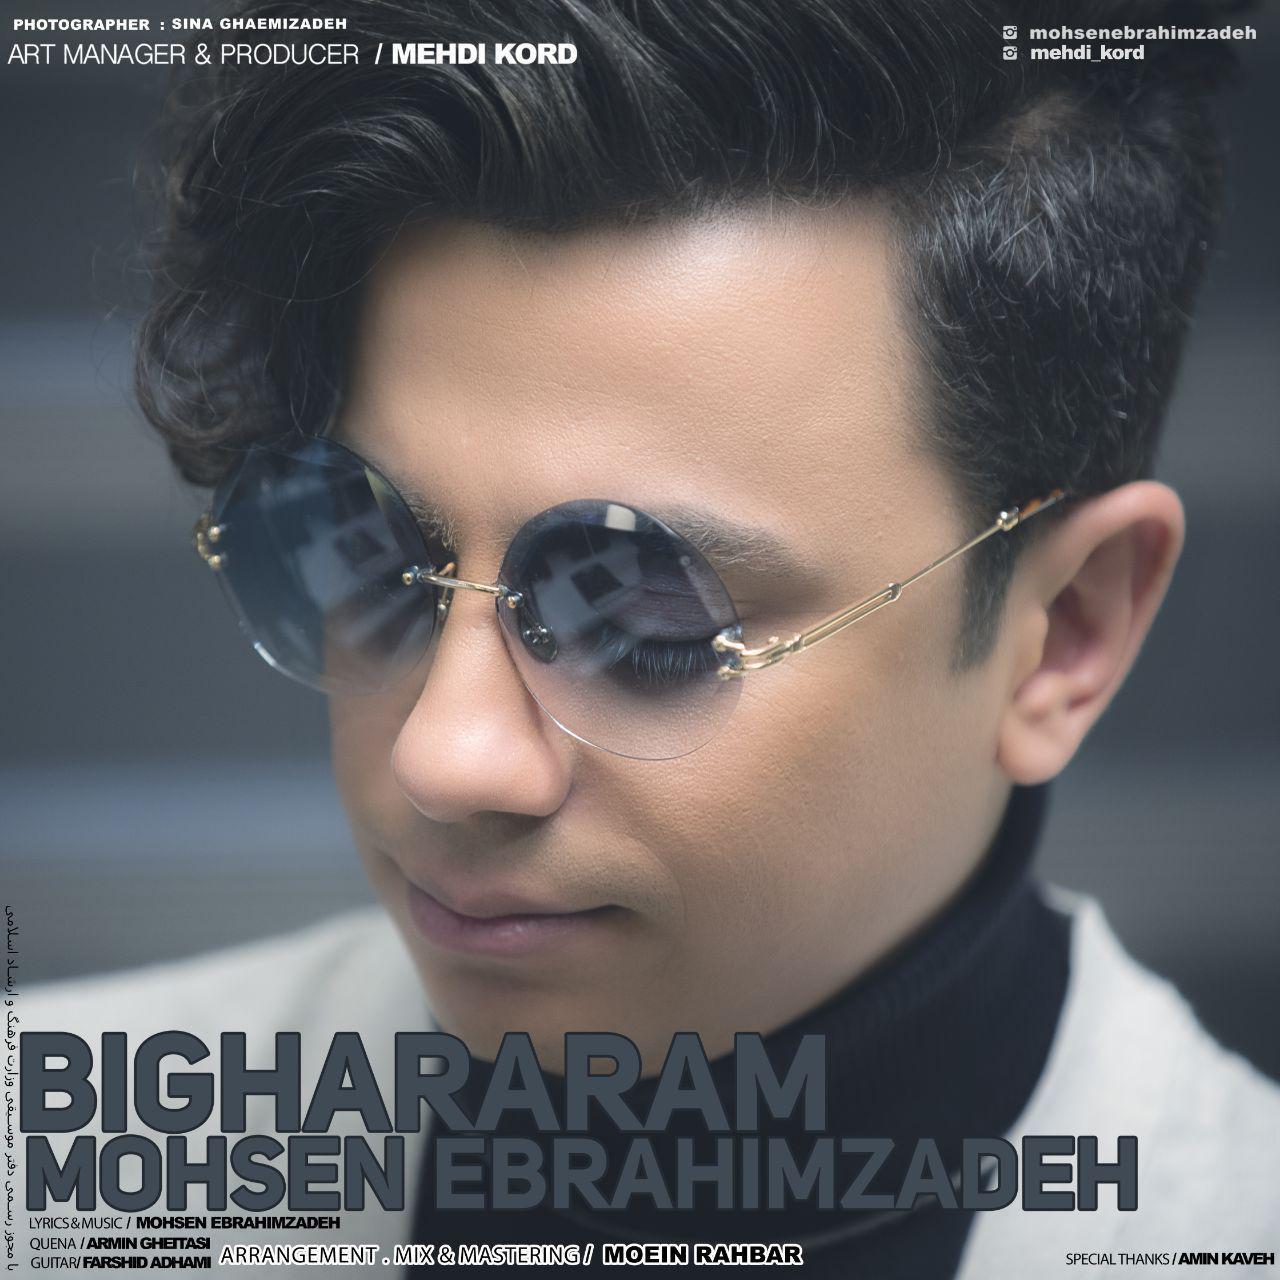 Mohsen Ebrahimzadeh - Bighararam